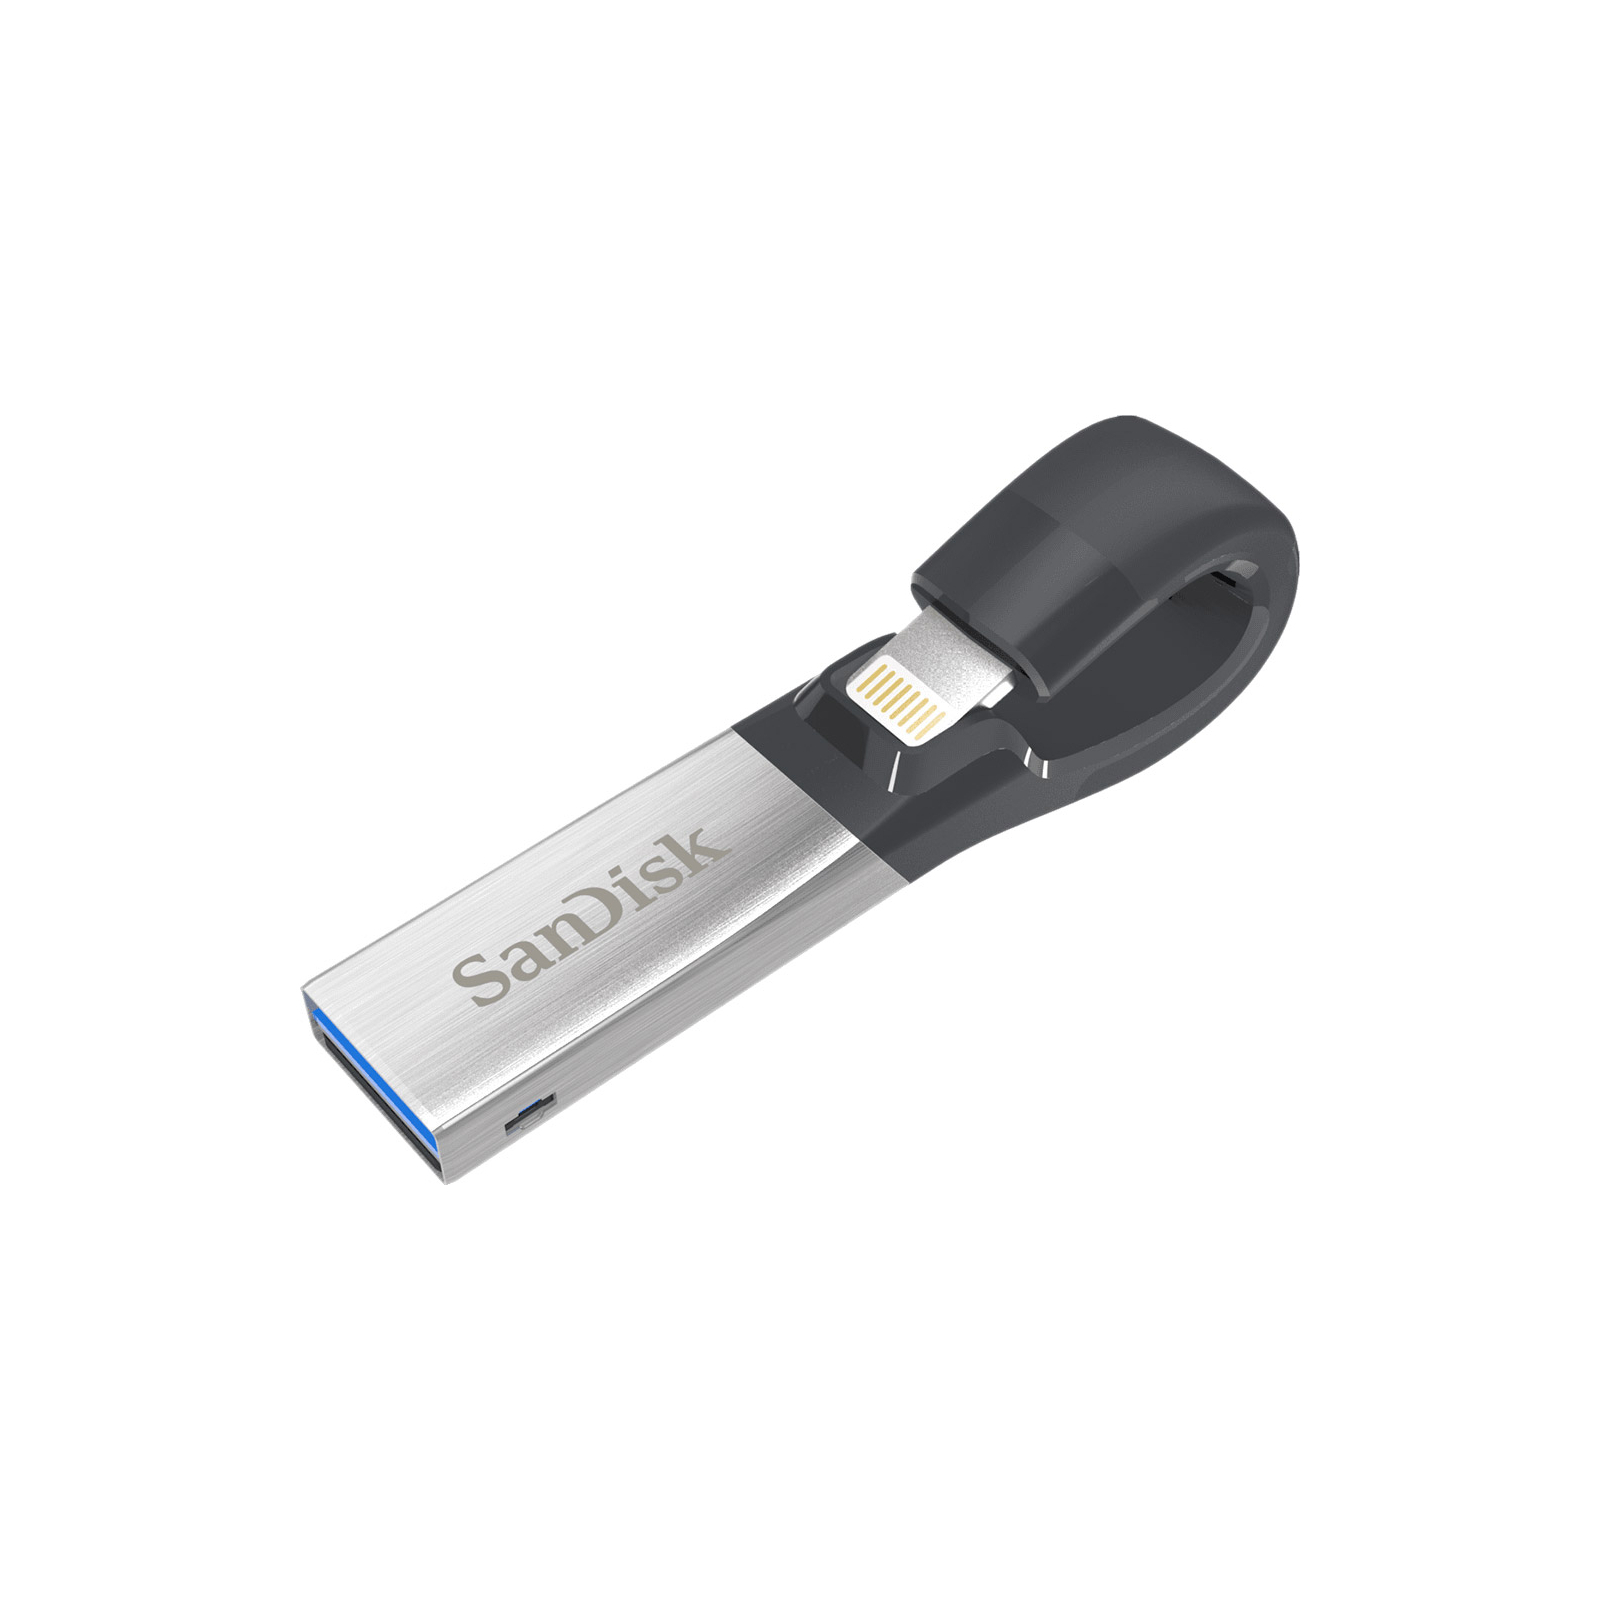 USB флеш накопитель SanDisk 32GB iXpand USB 3.0/Lightning (SDIX30C-032G-GN6NN) изображение 2